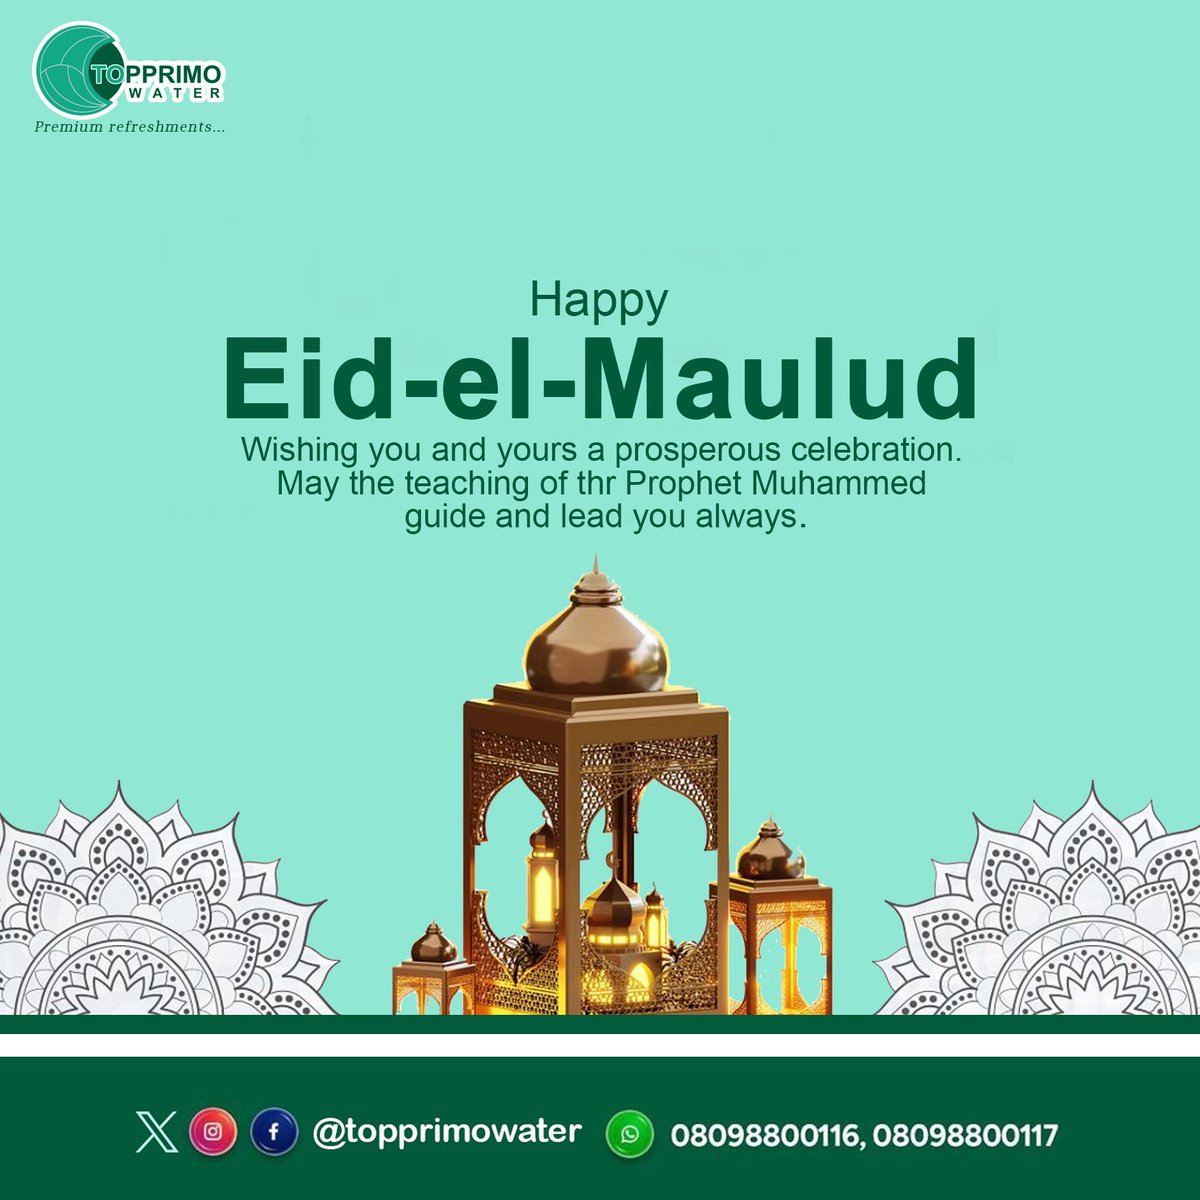 Wishing you and your loved ones a blessed Eid el-Maulud. May Allah shower you with His choicest blessings.

#EidMubarak #EidElMaulud #BlessedEid #EidJoy
#EidCelebration #EidVibes #EidLove #EidPeace #EidHappiness #EidGratitude #EidFamily #EidFriends #EidCommunity #moslems #fypシ